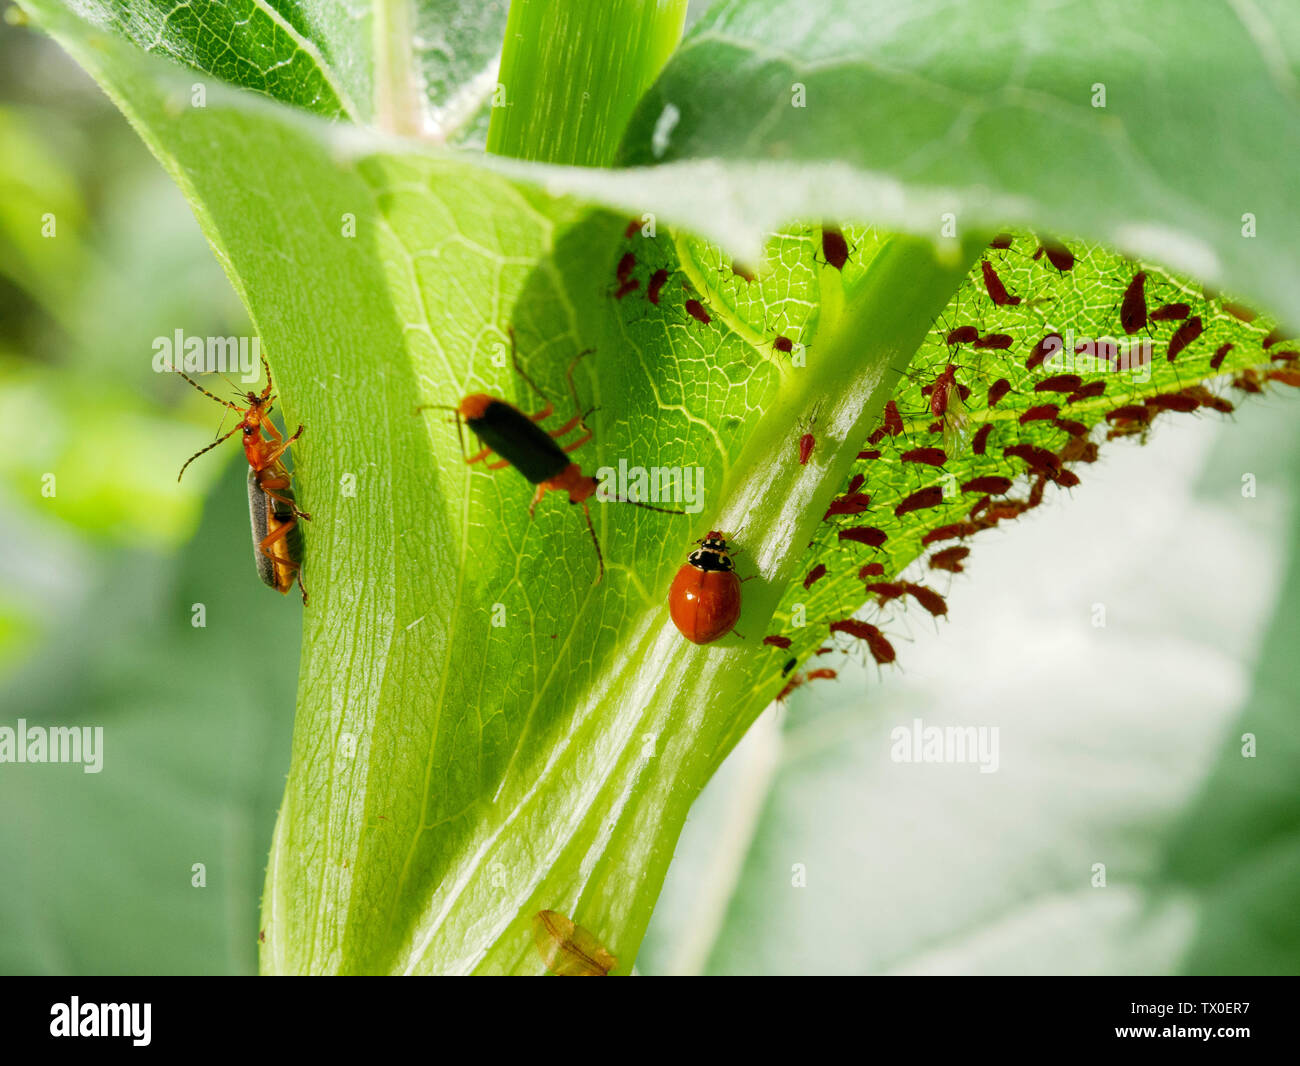 Leatherwing lanuginosa o soldato beetle (Pdabrus tomentosus) e lucidato lady beetle (Cycloneda munda) consumando afidi (Uroleucon spp). Foto Stock